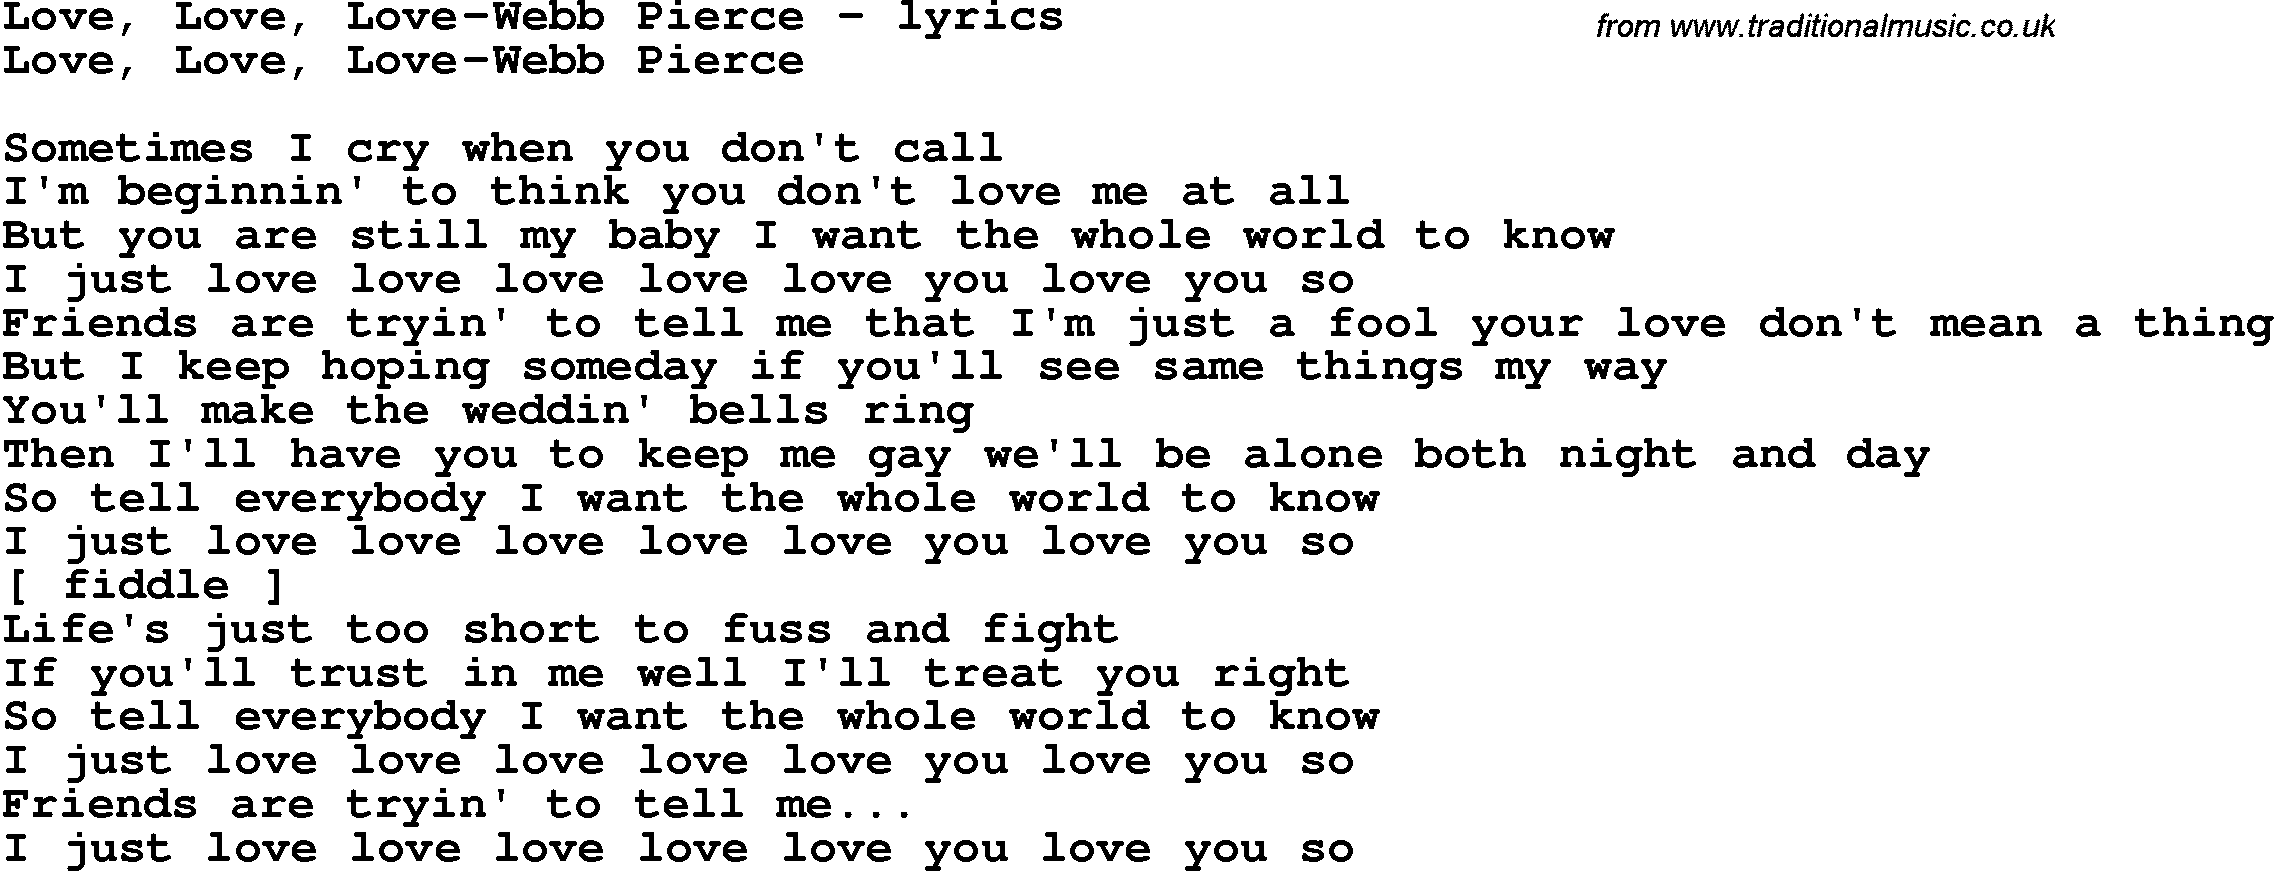 Love Song Lyrics for: Love, Love, Love-Webb Pierce